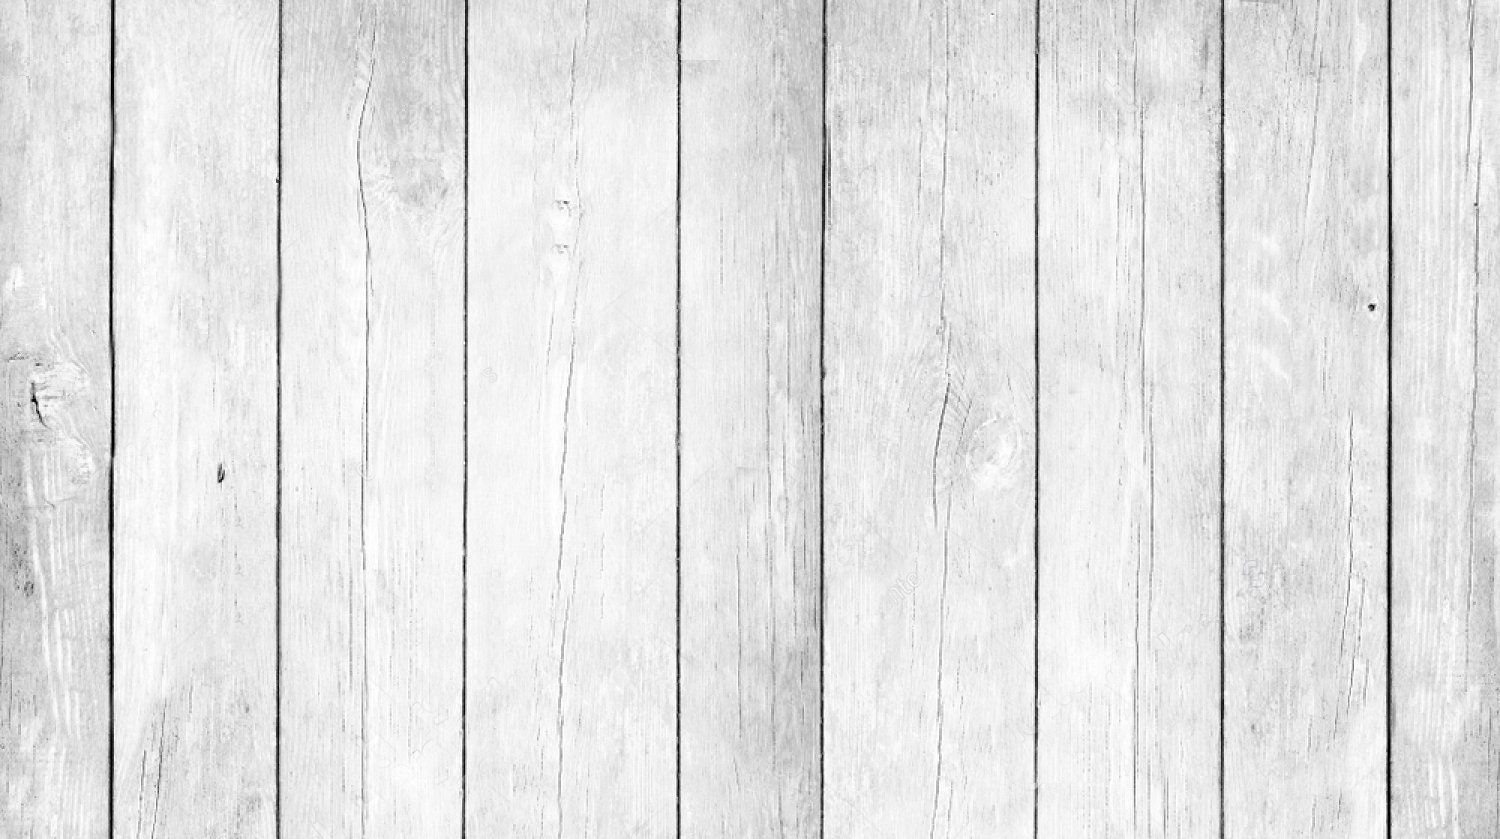 Wallpaper Wooden Boards in White Wood Texture Loft Design | Etsy